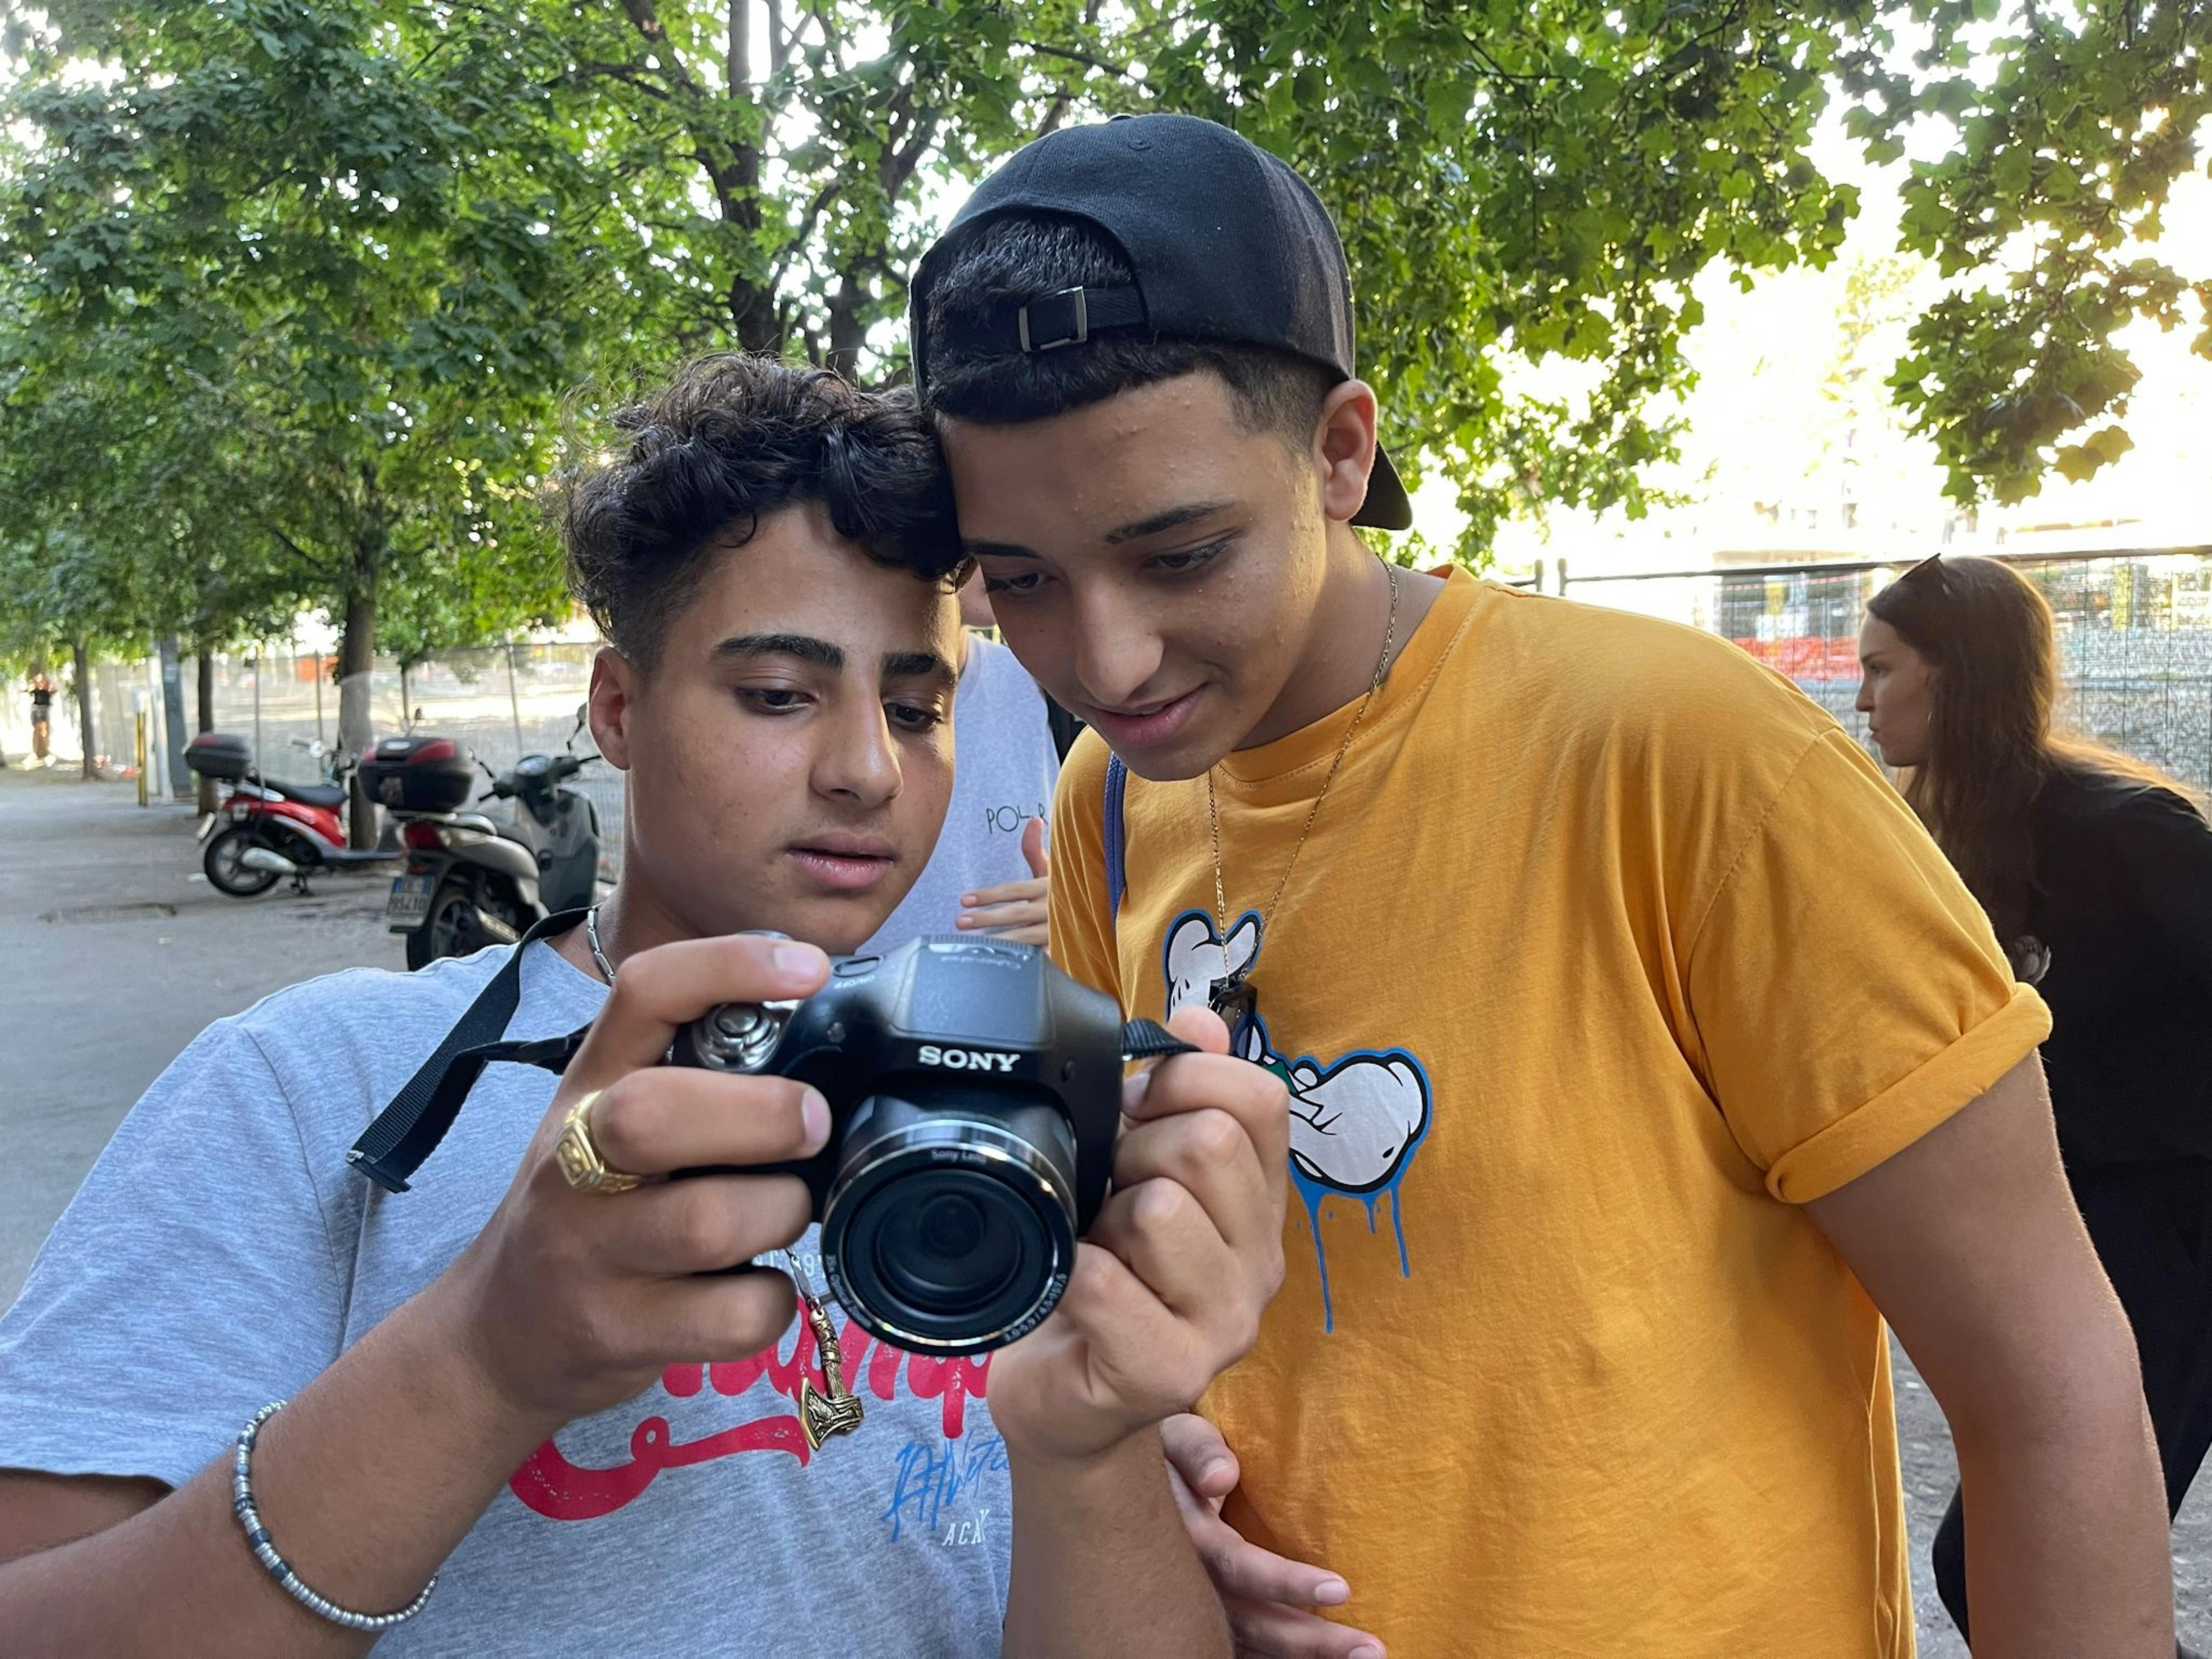 Kamal e Rami, 17 anni, Egitto, tra i partecipanti al workshop di fotografia Credit: UNICEF/Pirozzi